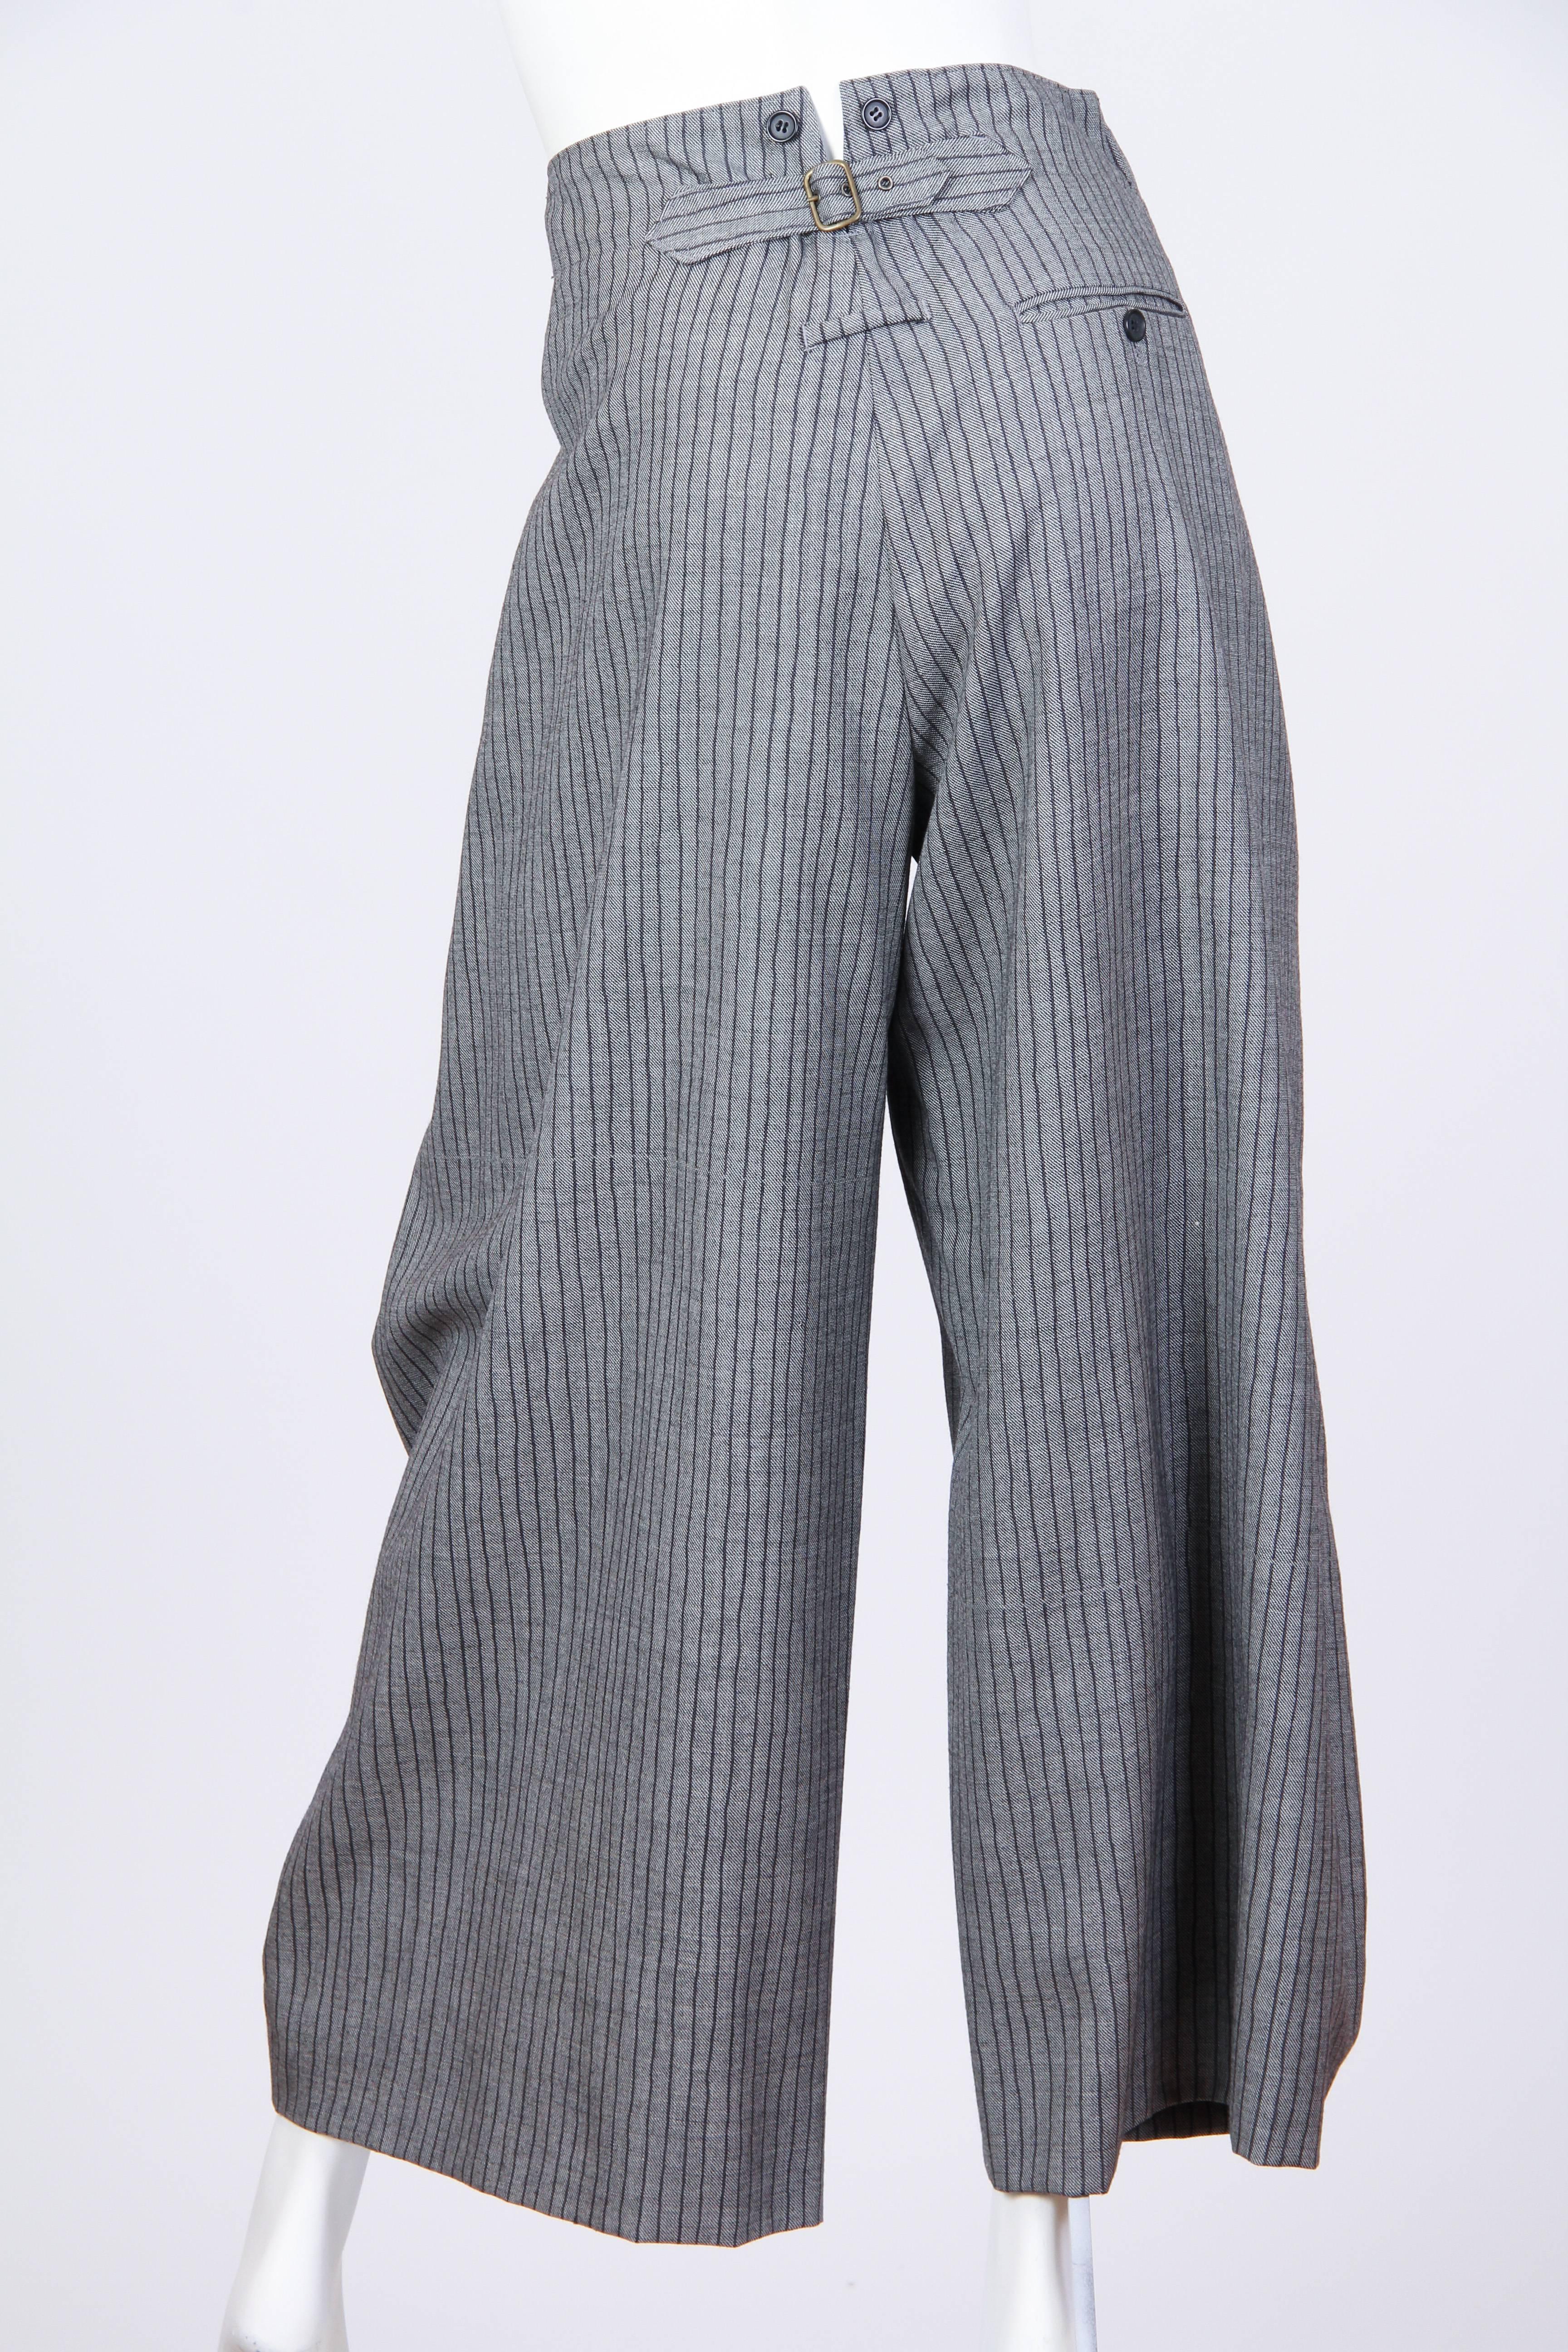 Jean Paul Gaultier Oragami Trousers 1